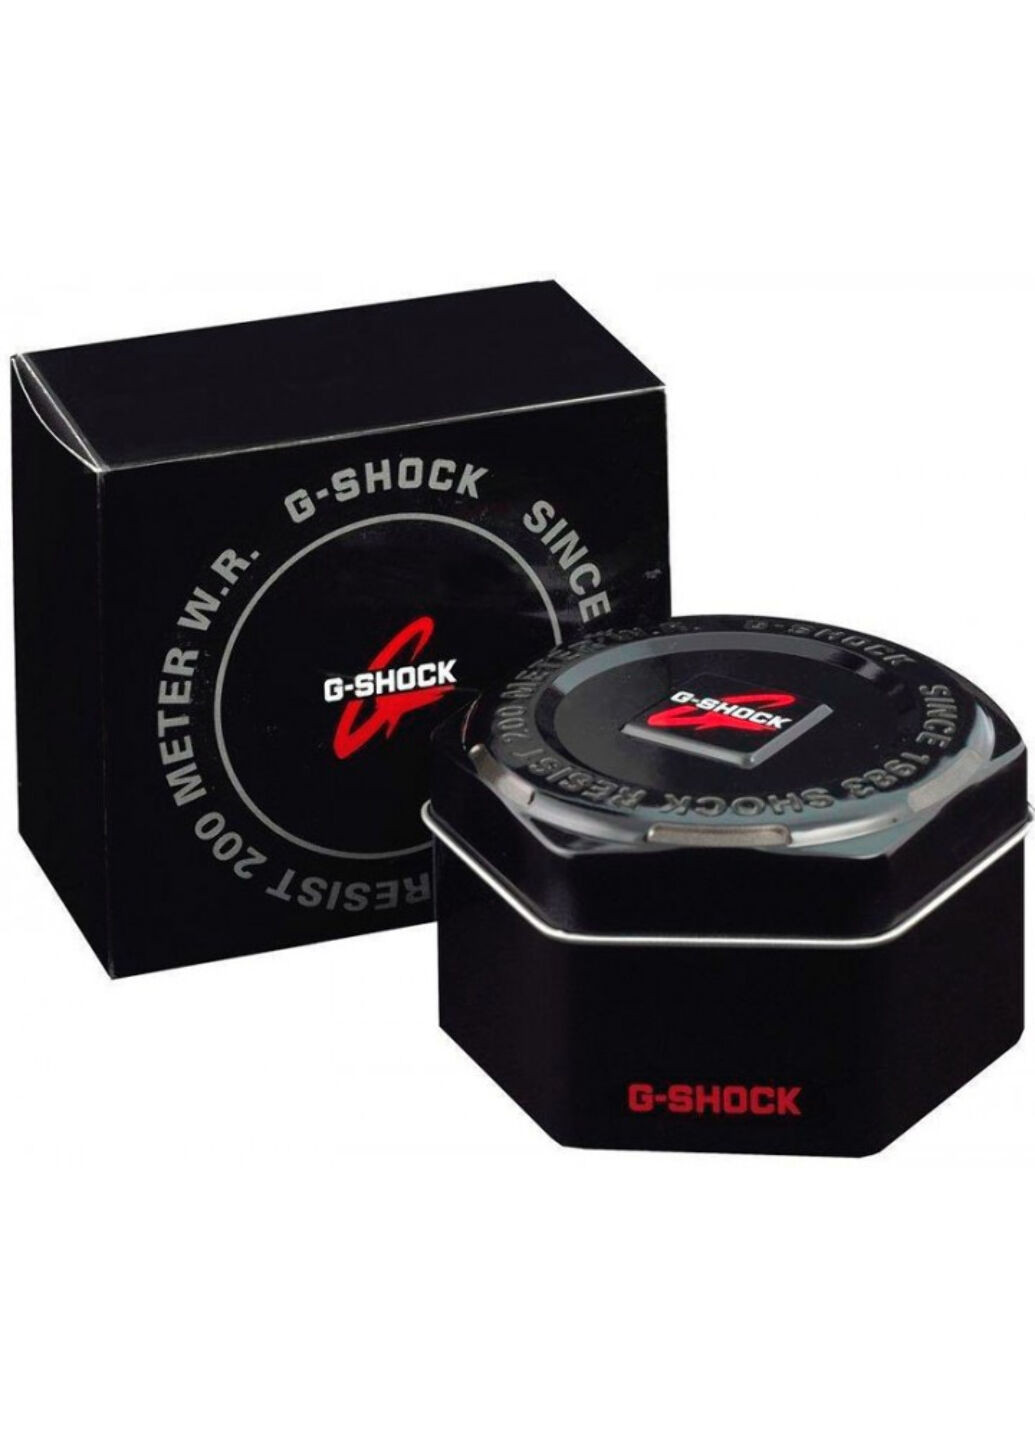 Часы наручные Casio glx-s5600-1er (260031620)